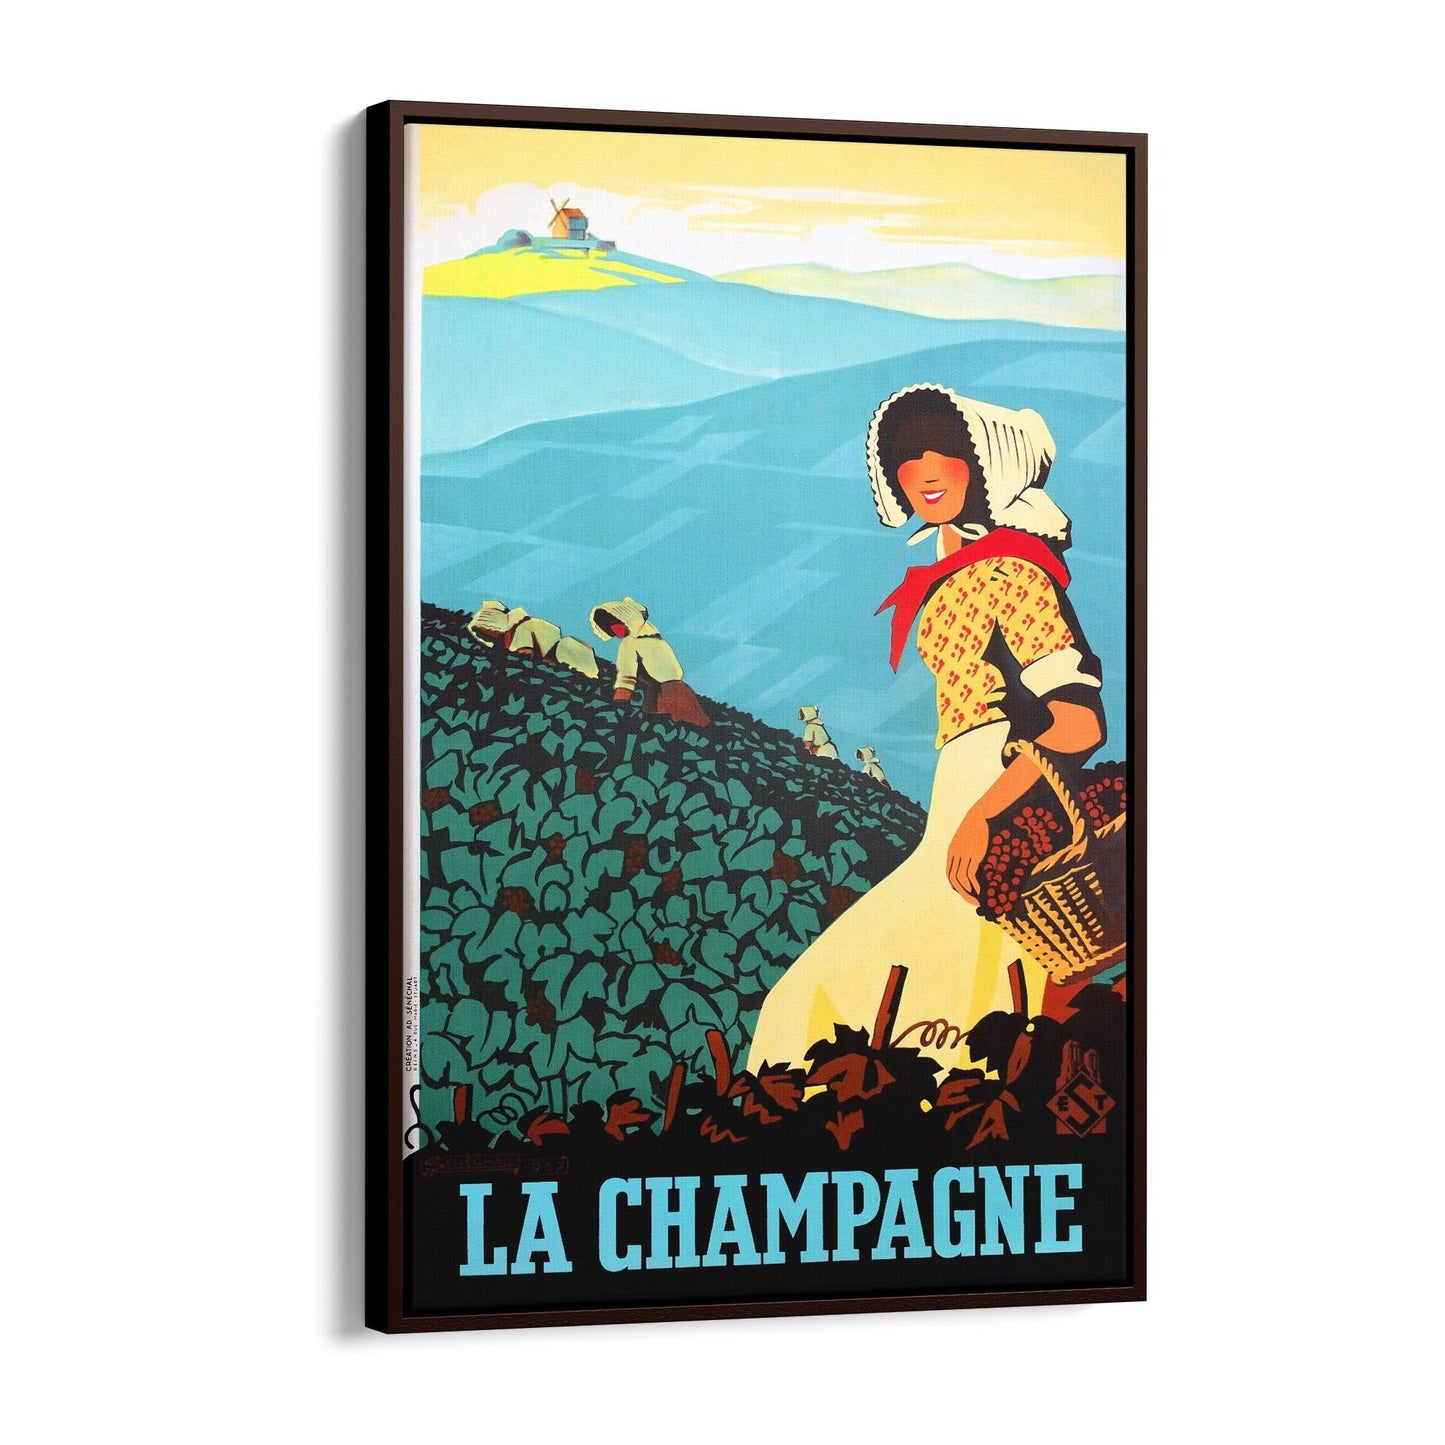 Champagne, France by Adrien Senechal | Framed Canvas Vintage Travel Advertisement